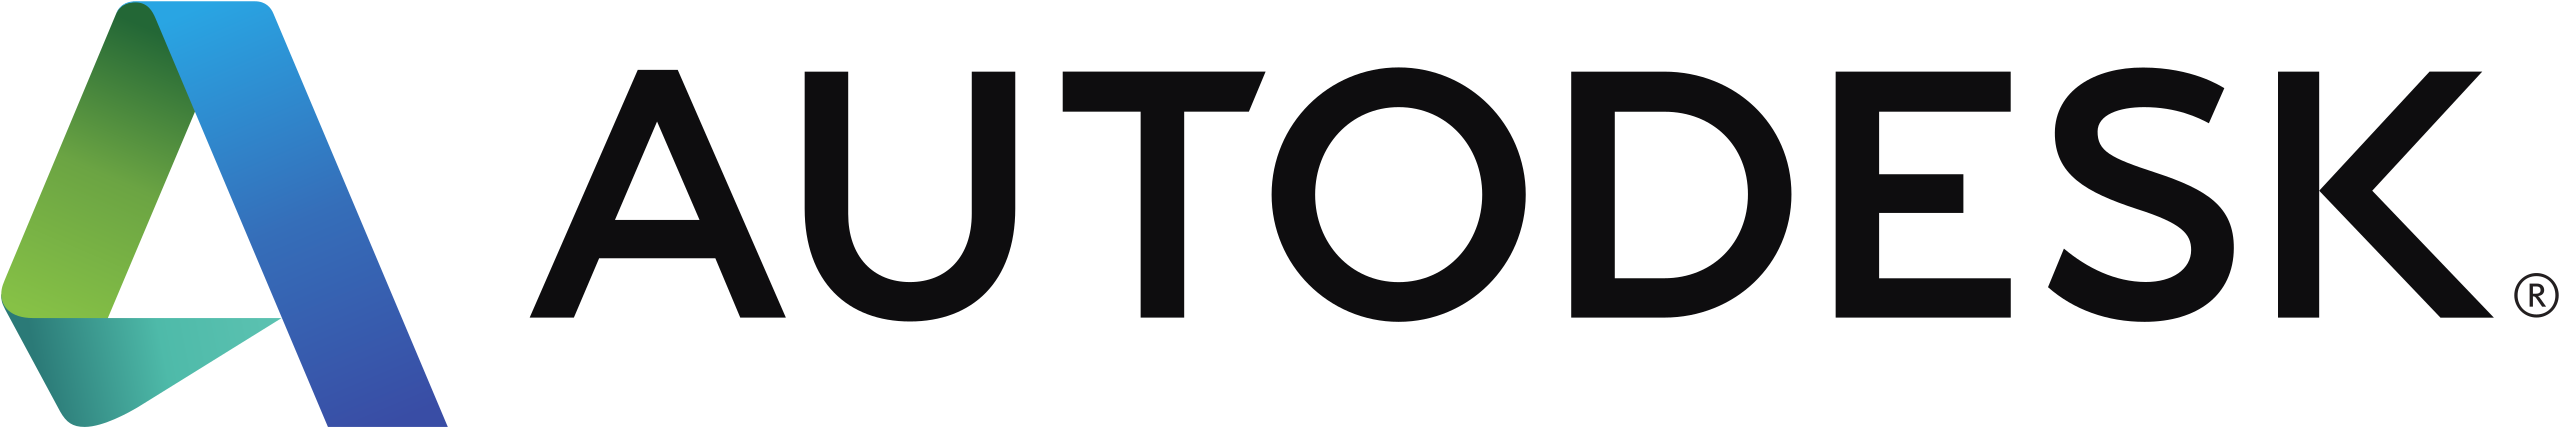 Autodesk_Logo.svg